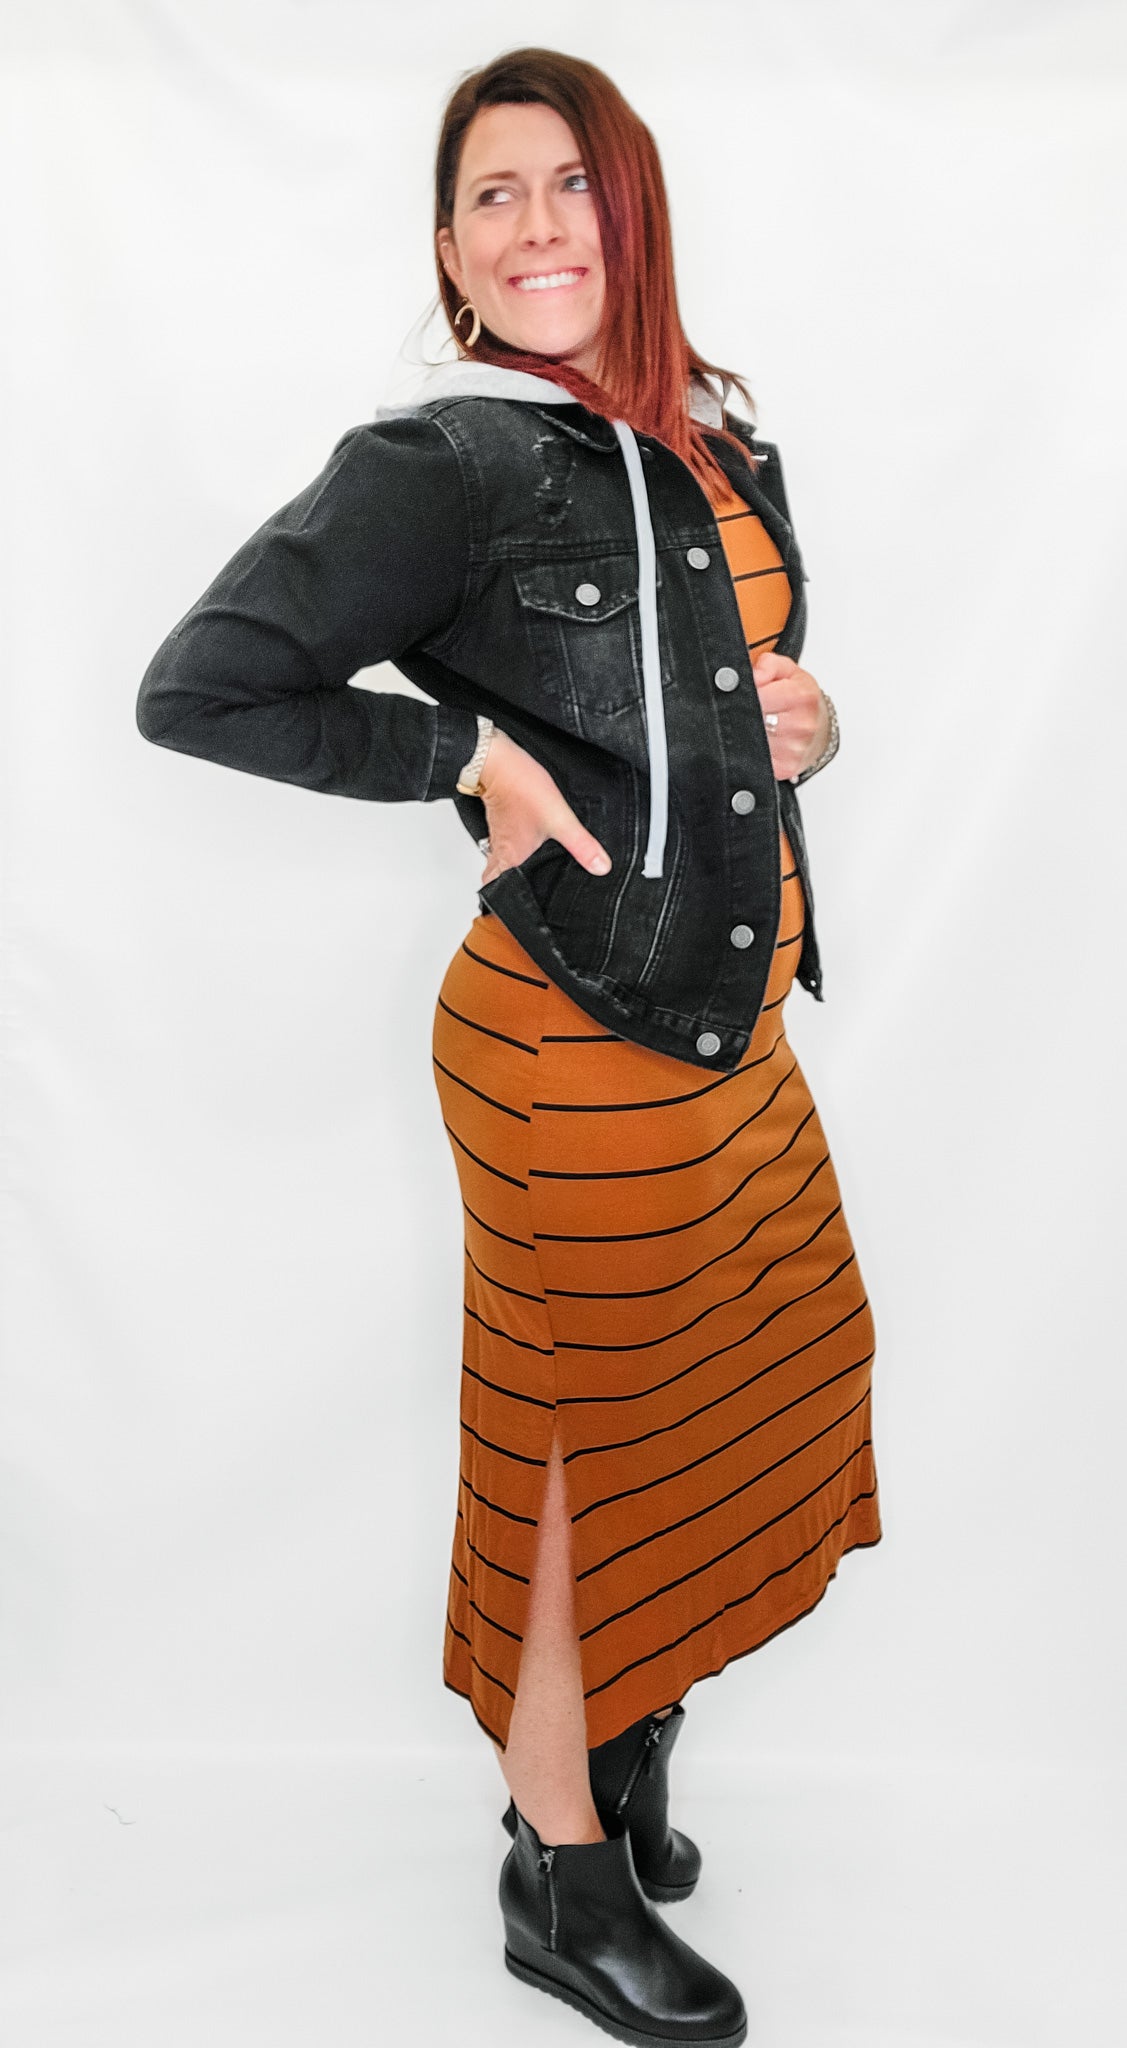 Brown & Black Striped Sleeveless Dress